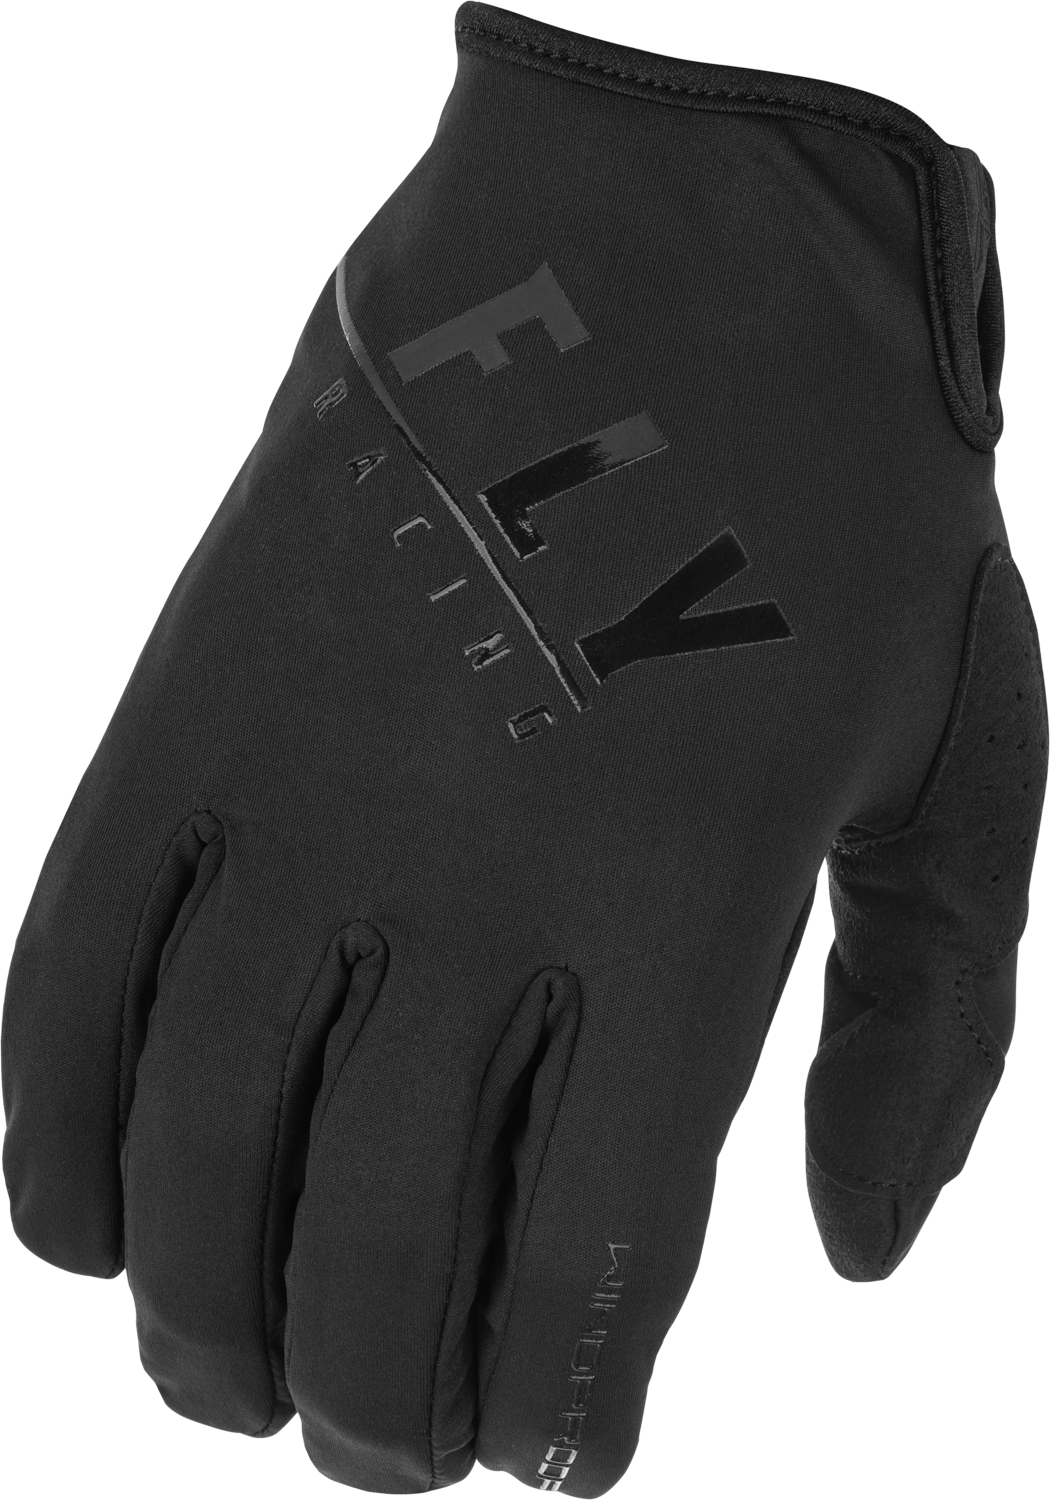 Windproof Gloves Black Sz 10